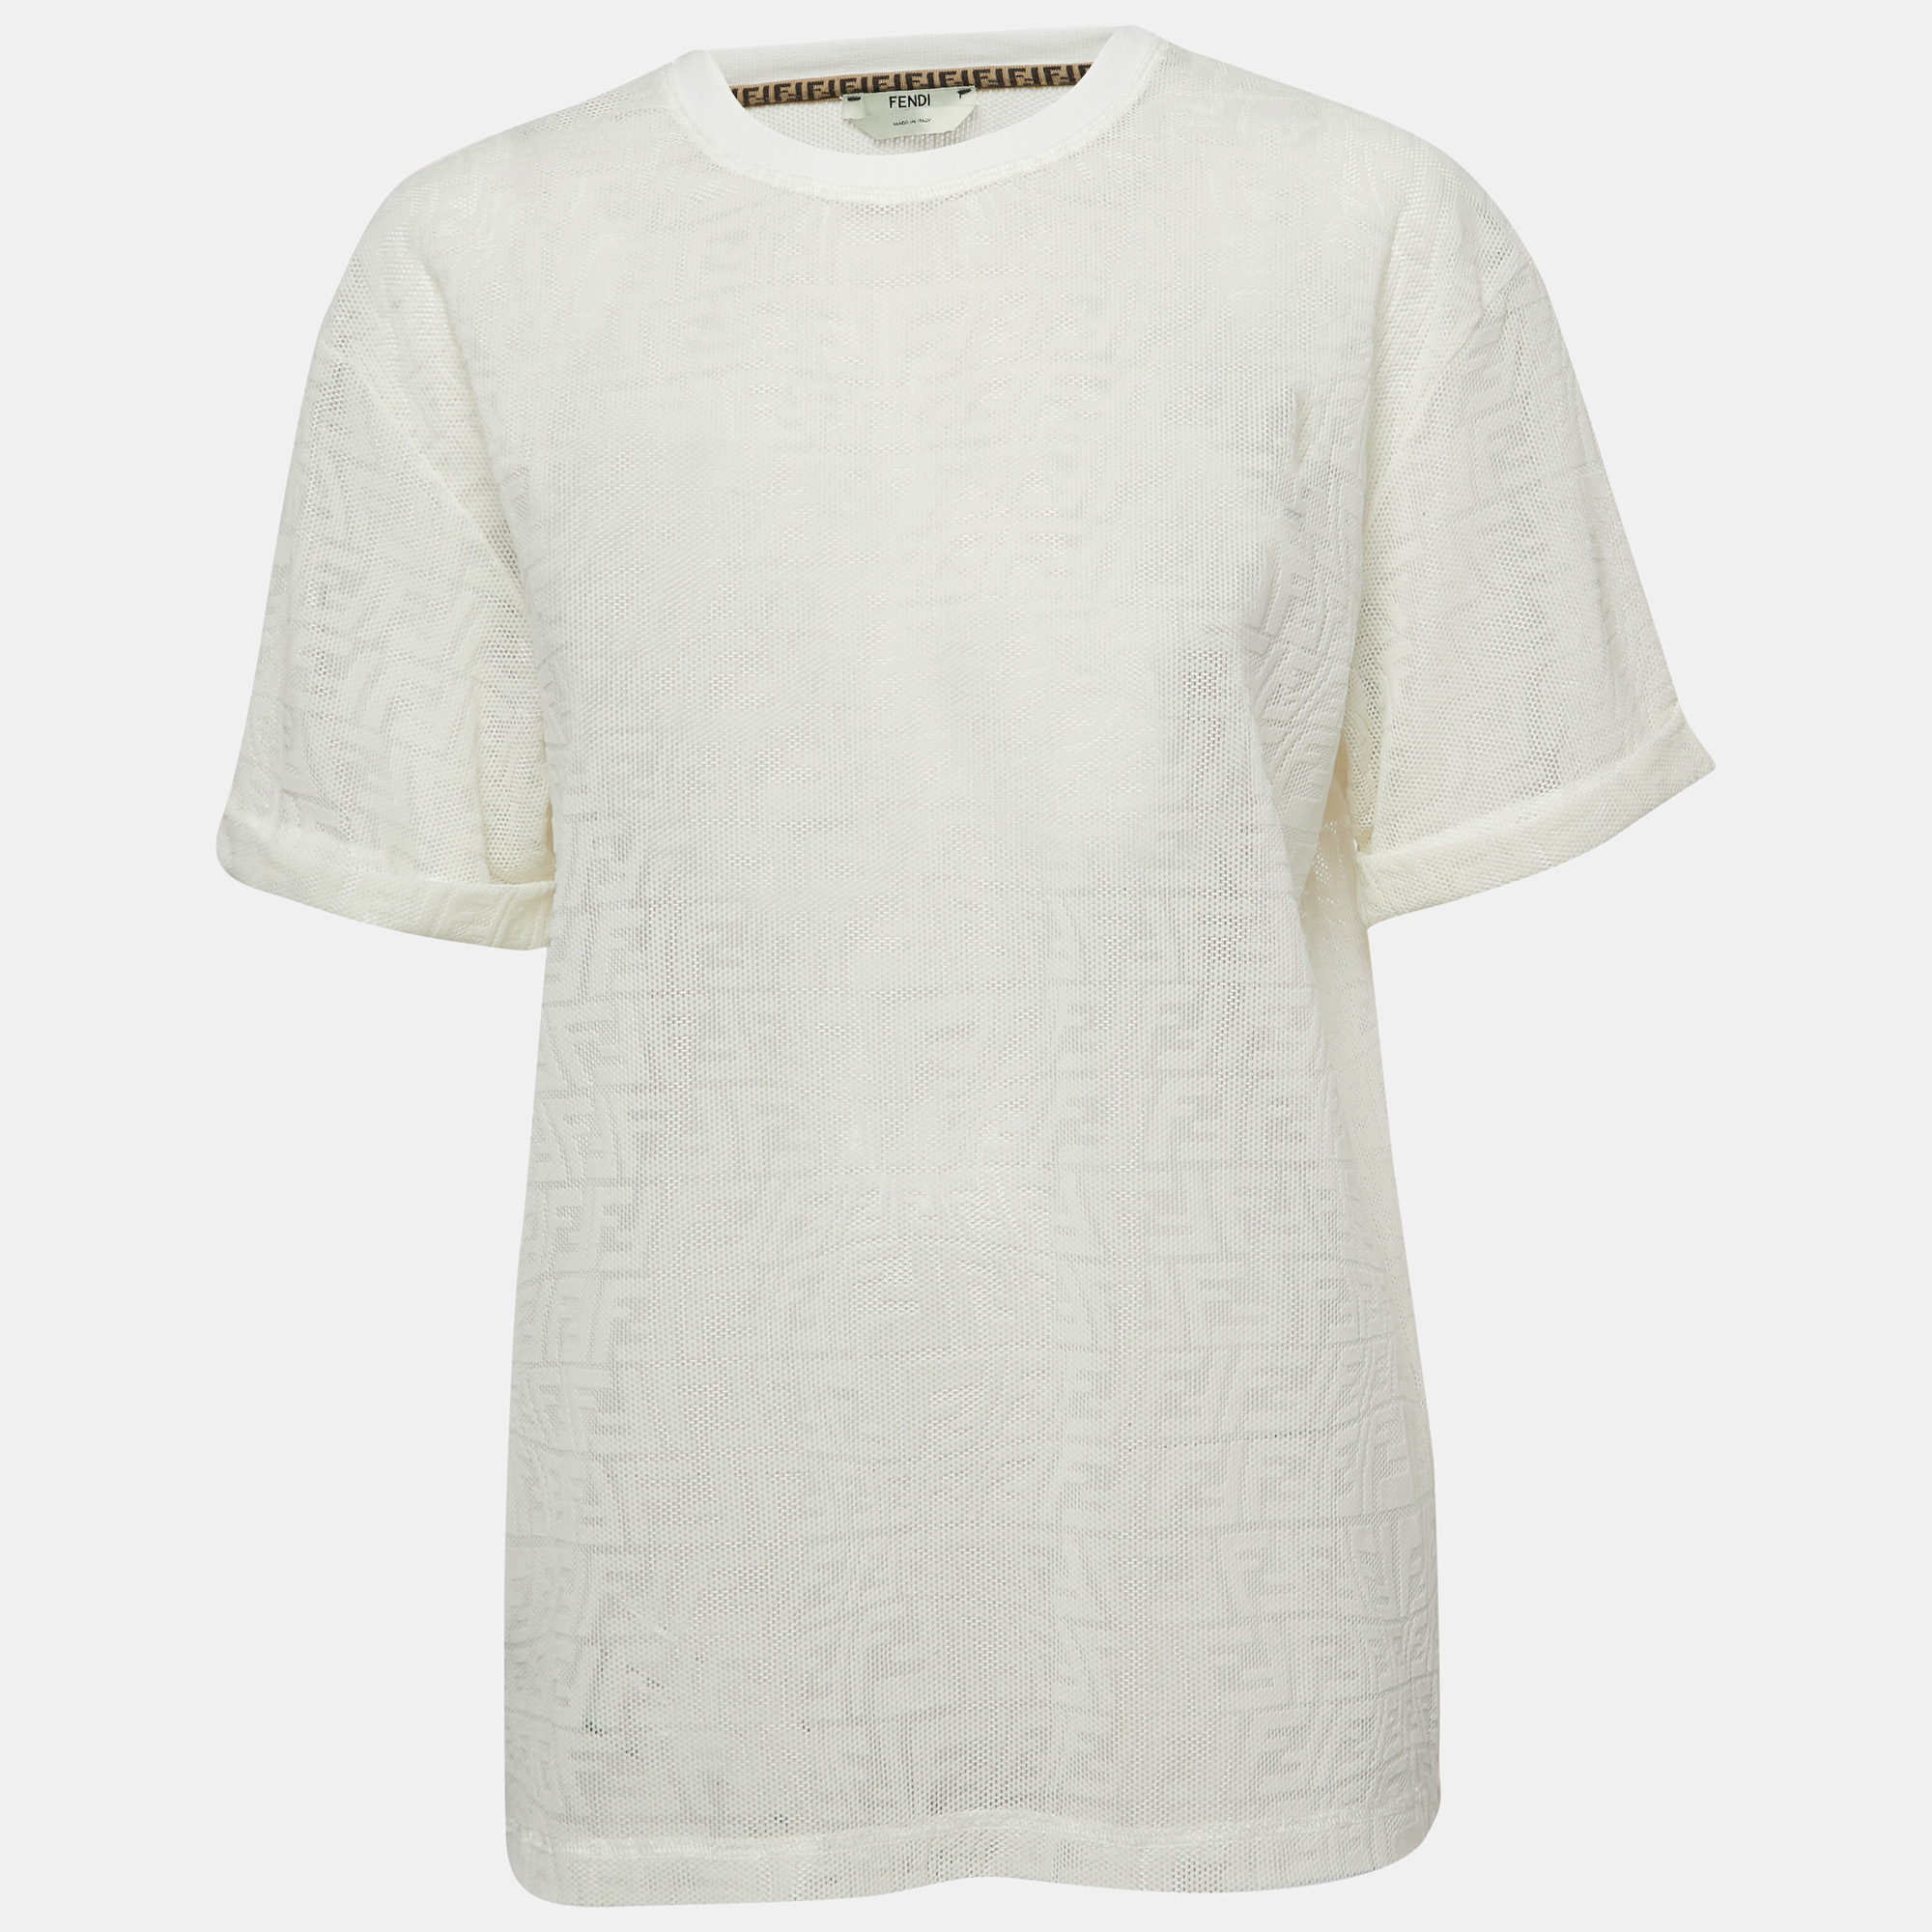 Fendi ivory white wave ff mesh t-shirt m